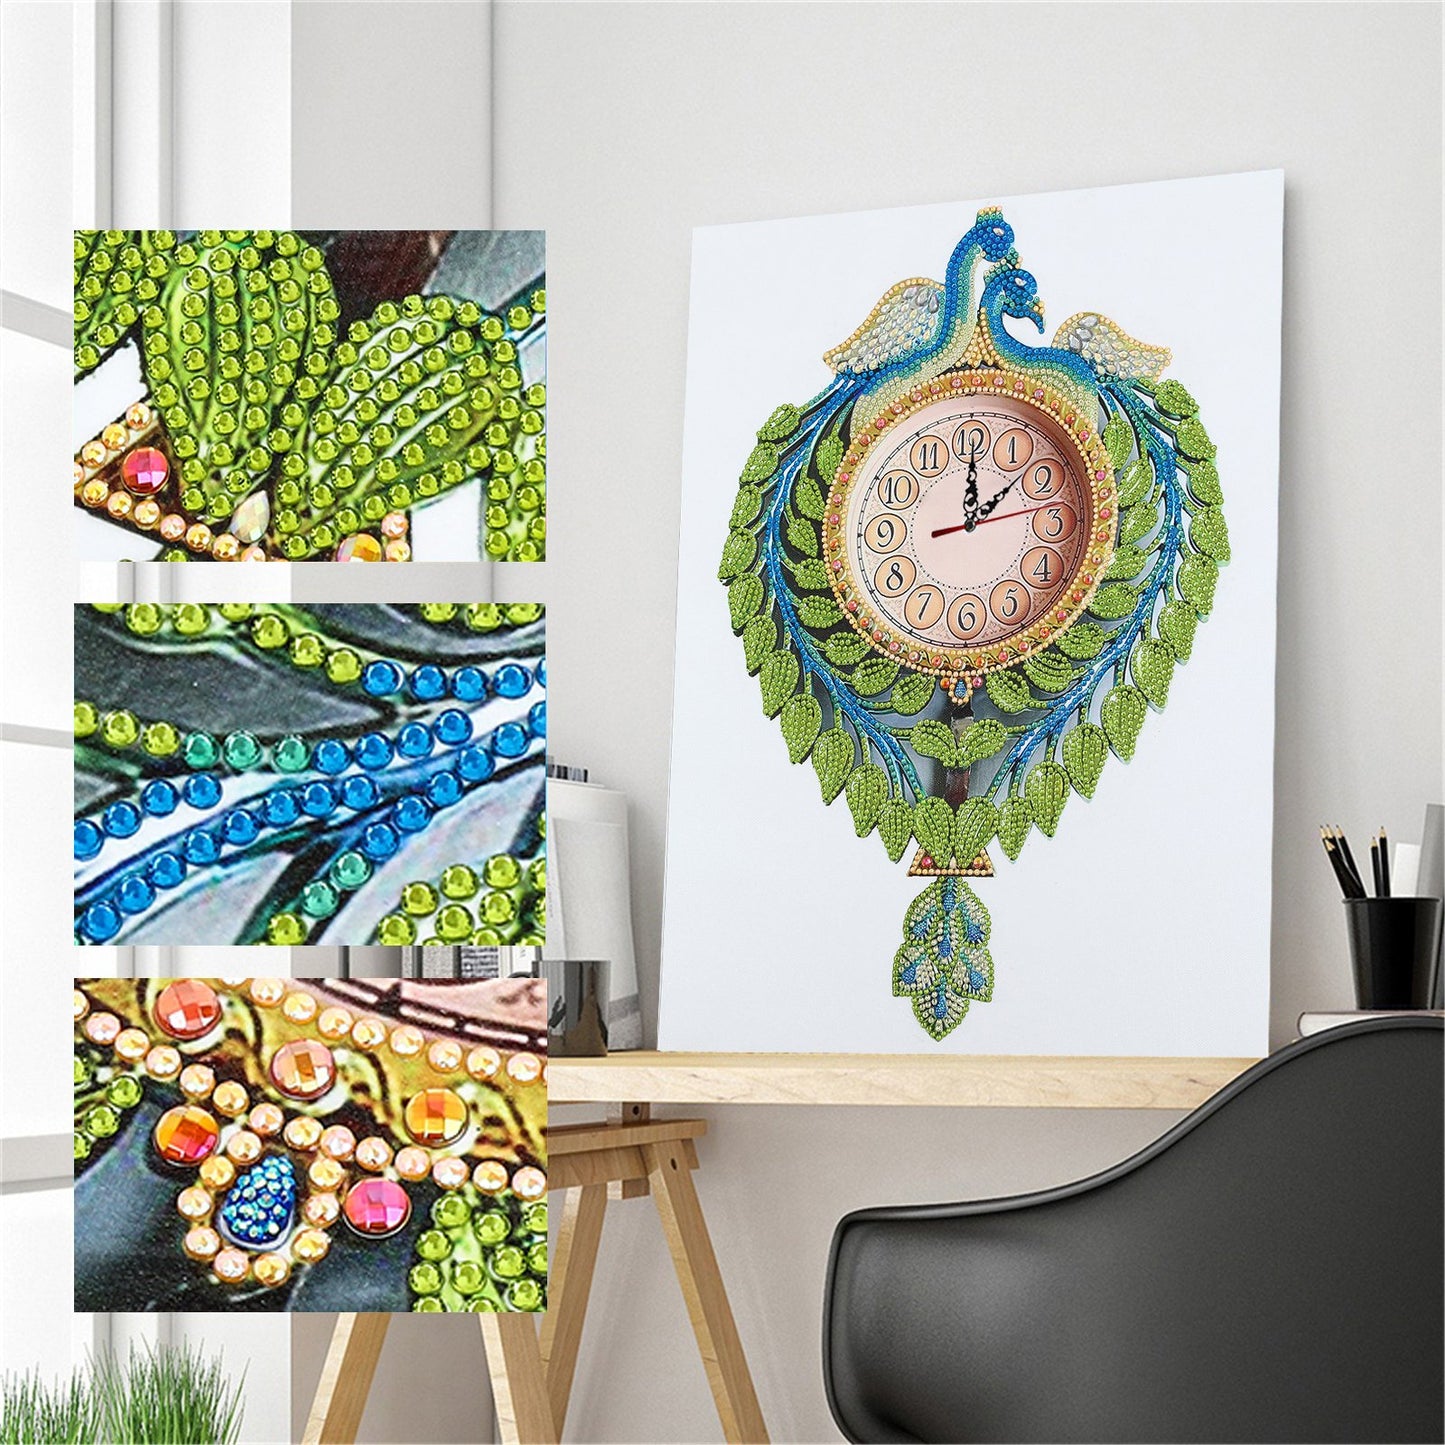 Peacock Clock | Special Shaped Diamond Painting Kits